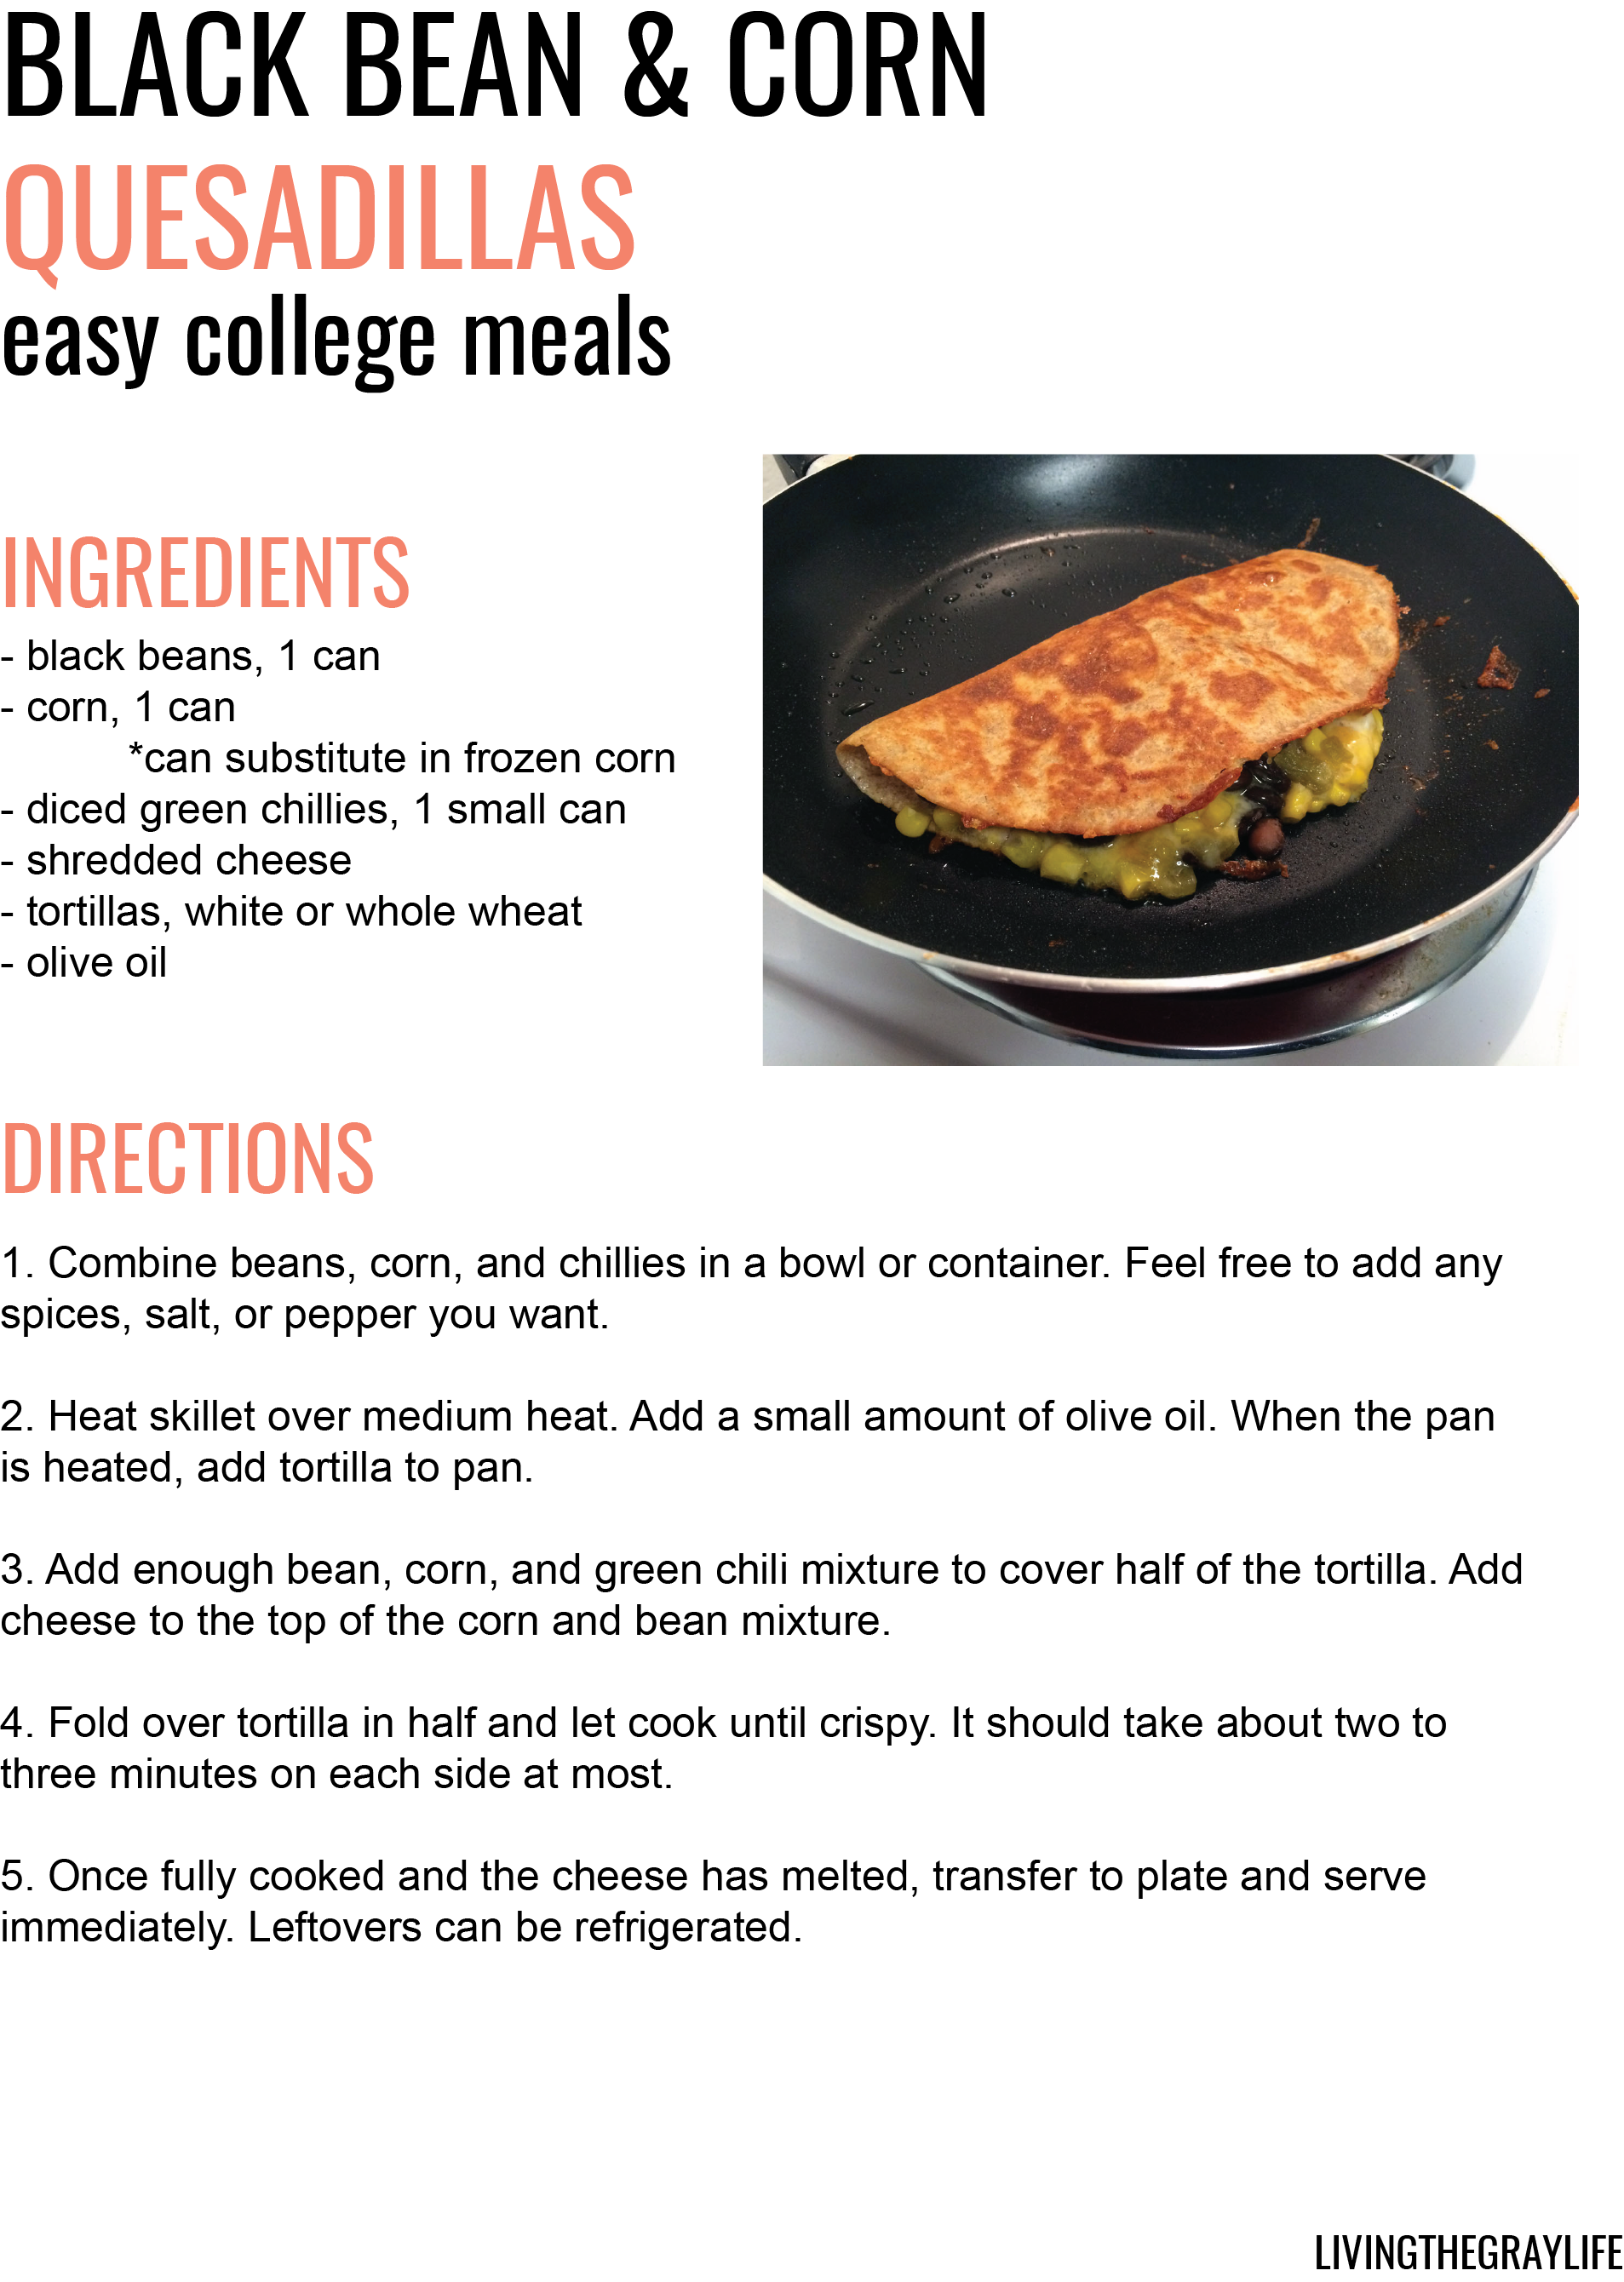 easy college meals black bean and corn quesedilla